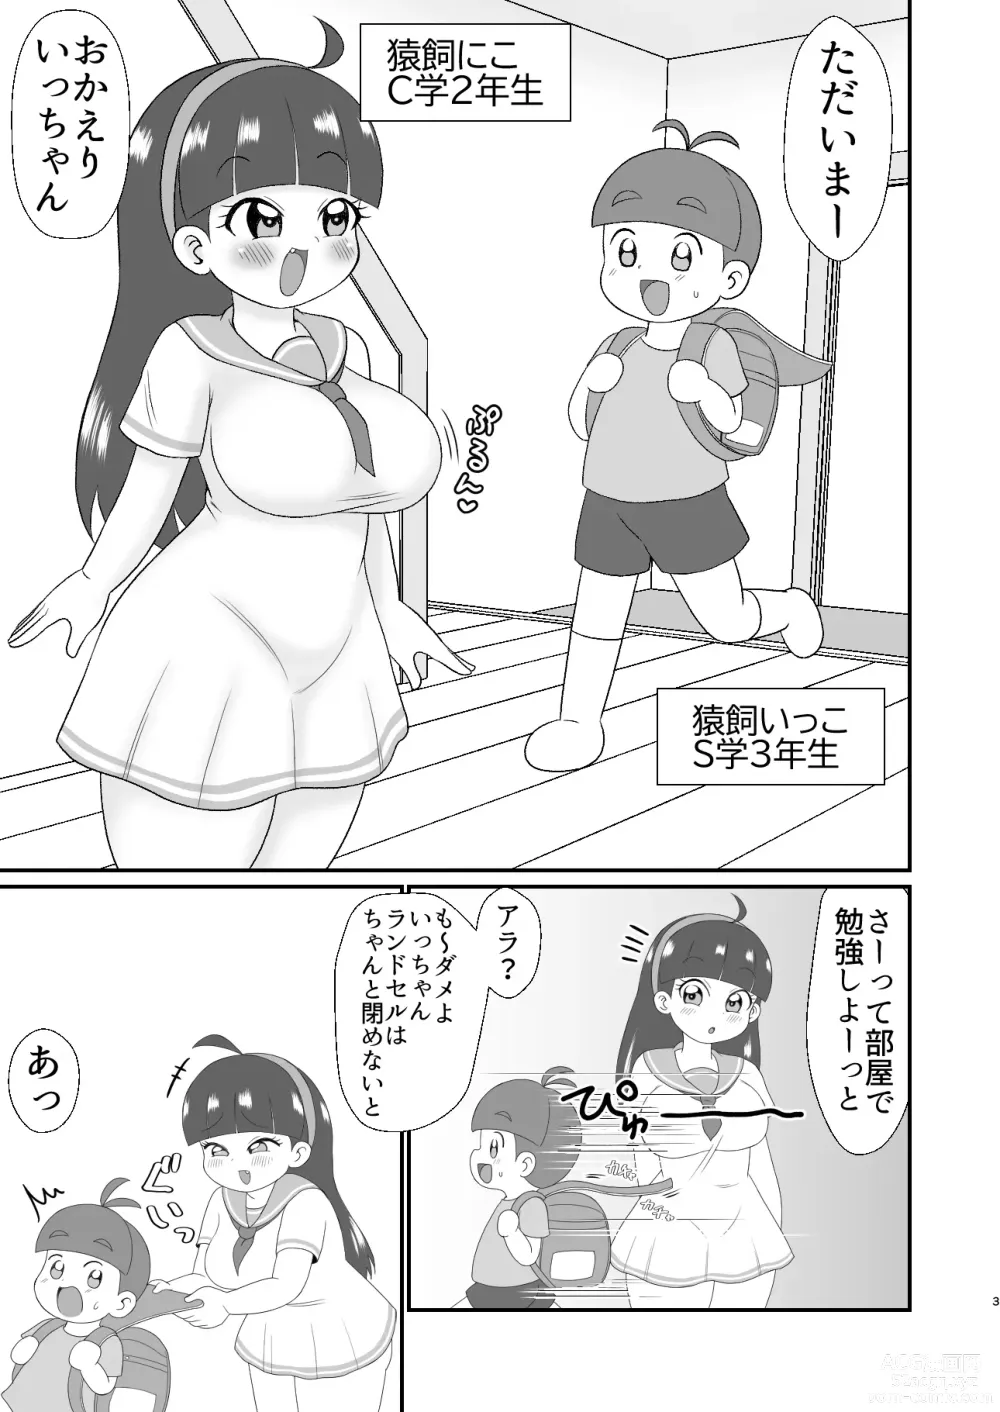 Page 2 of doujinshi Etemaru-kun